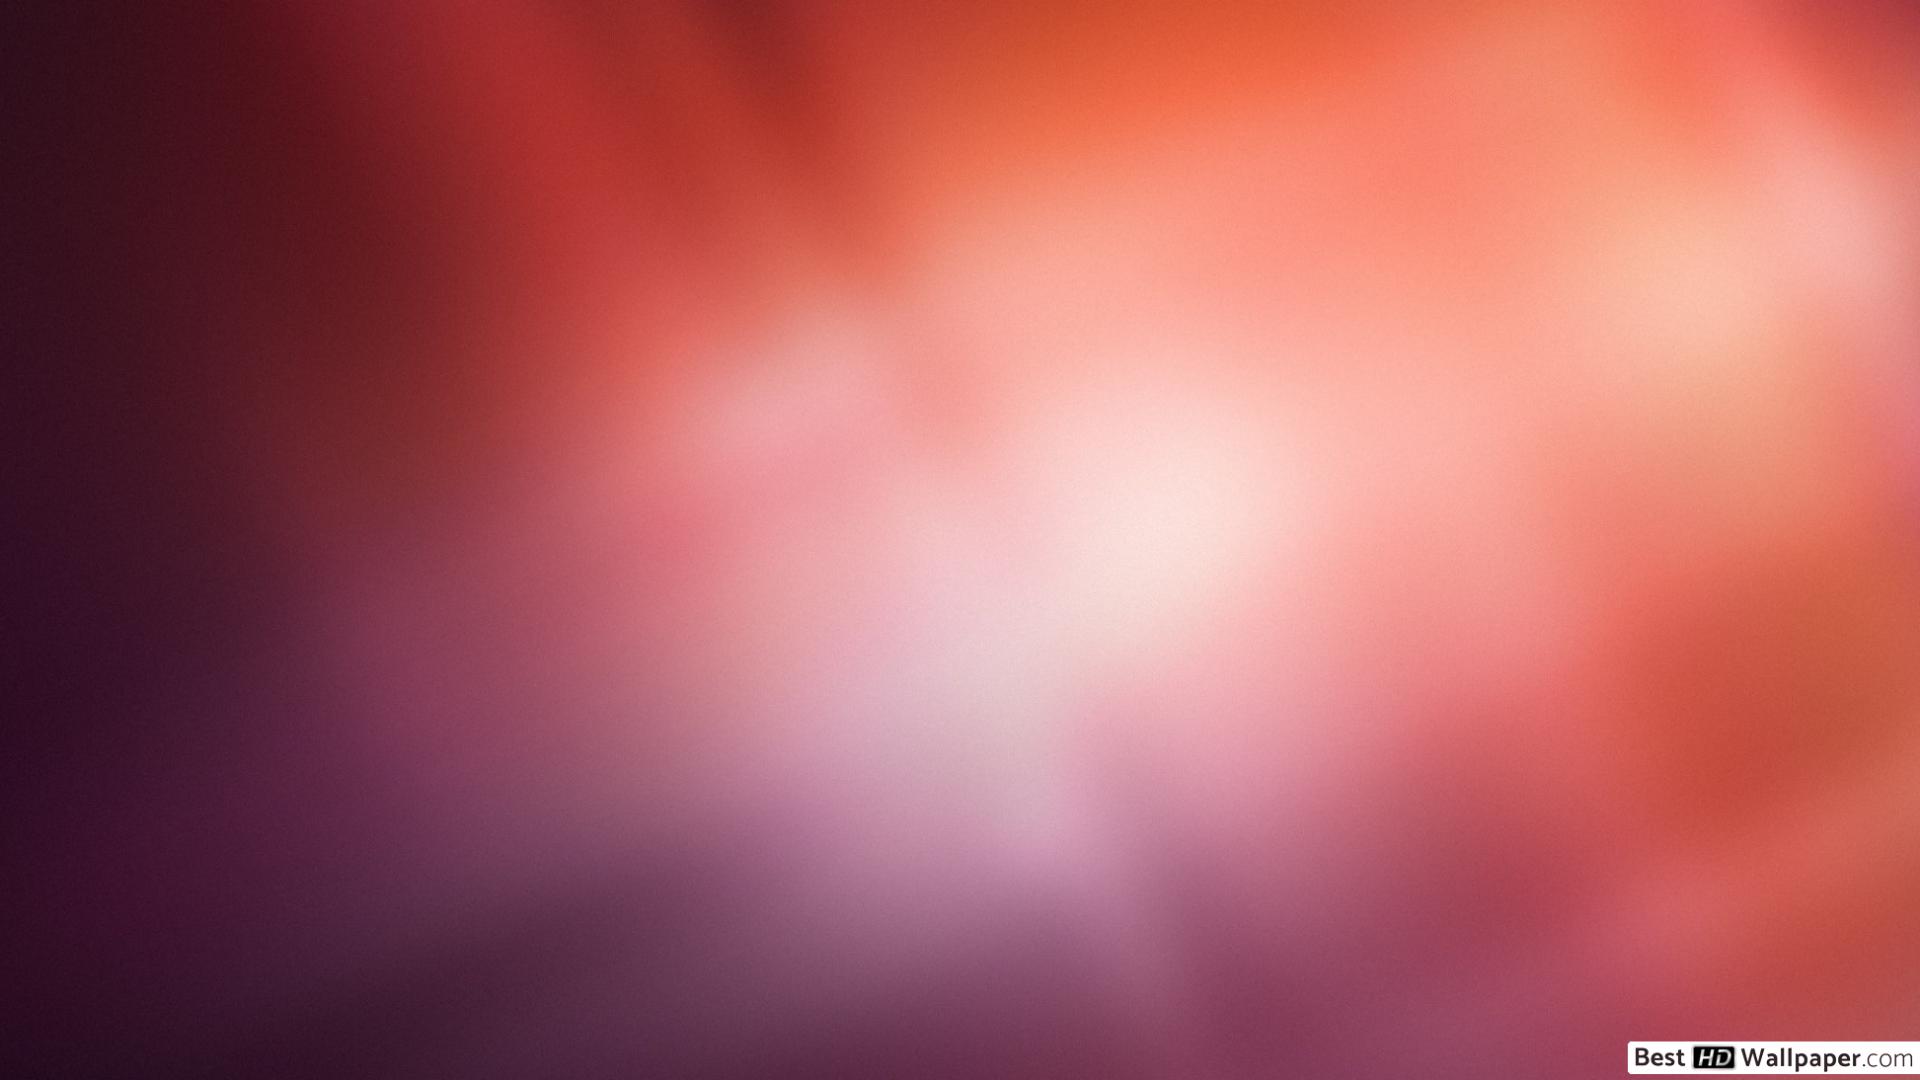 ubuntu wallpaper,rot,rosa,himmel,licht,lila